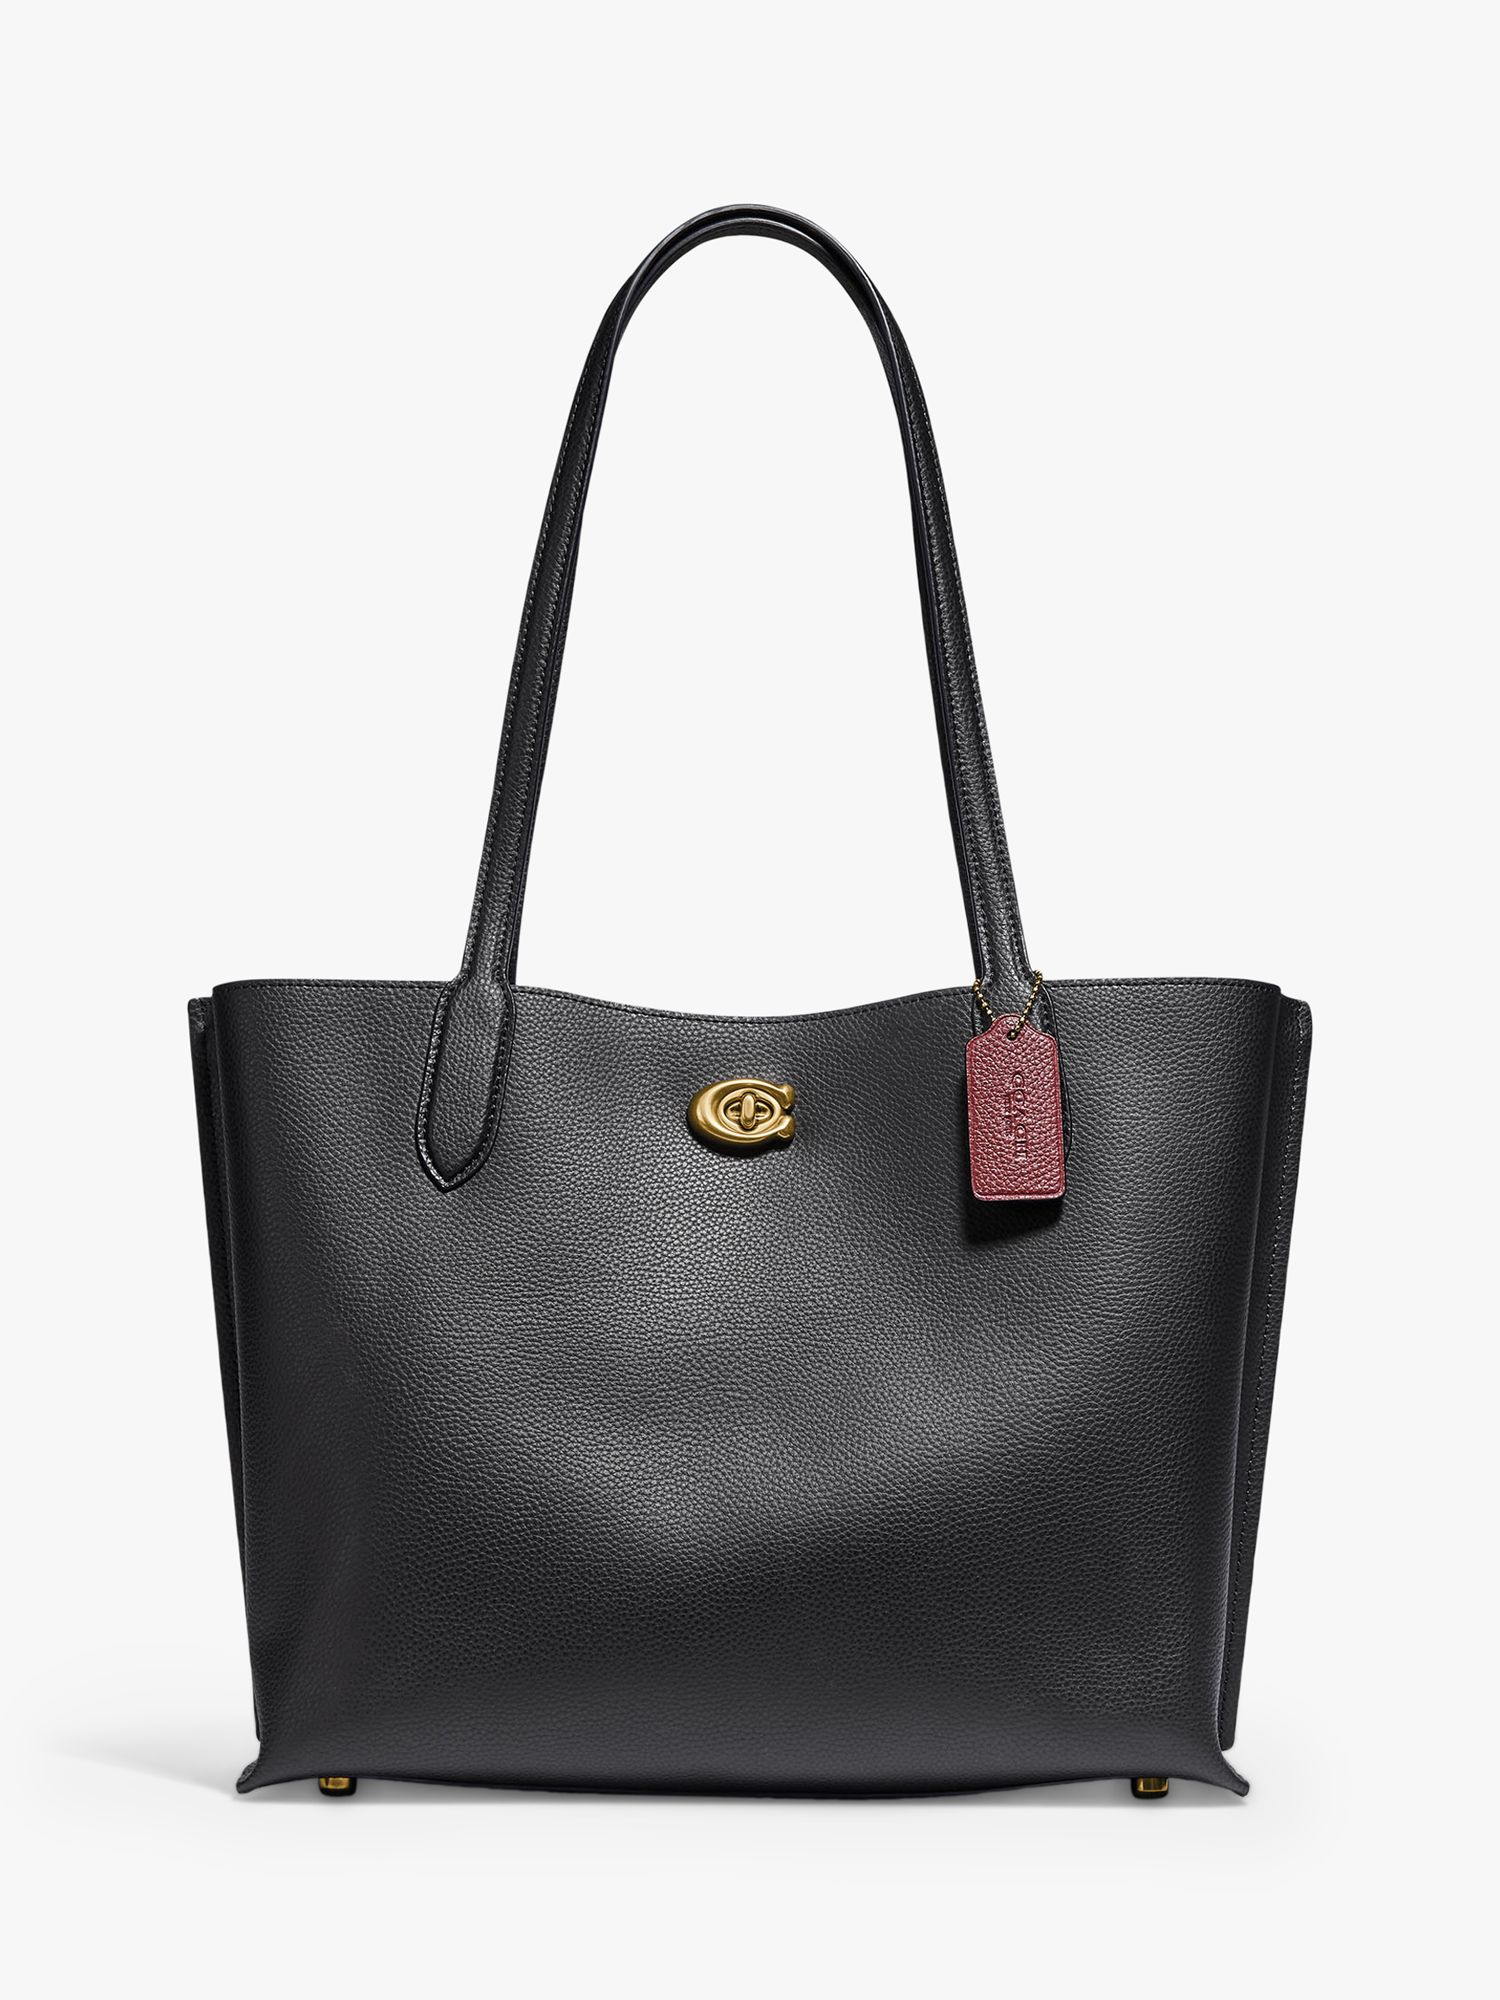 Women's Coach Handbags, Bags & Purses | John Lewis & Partners